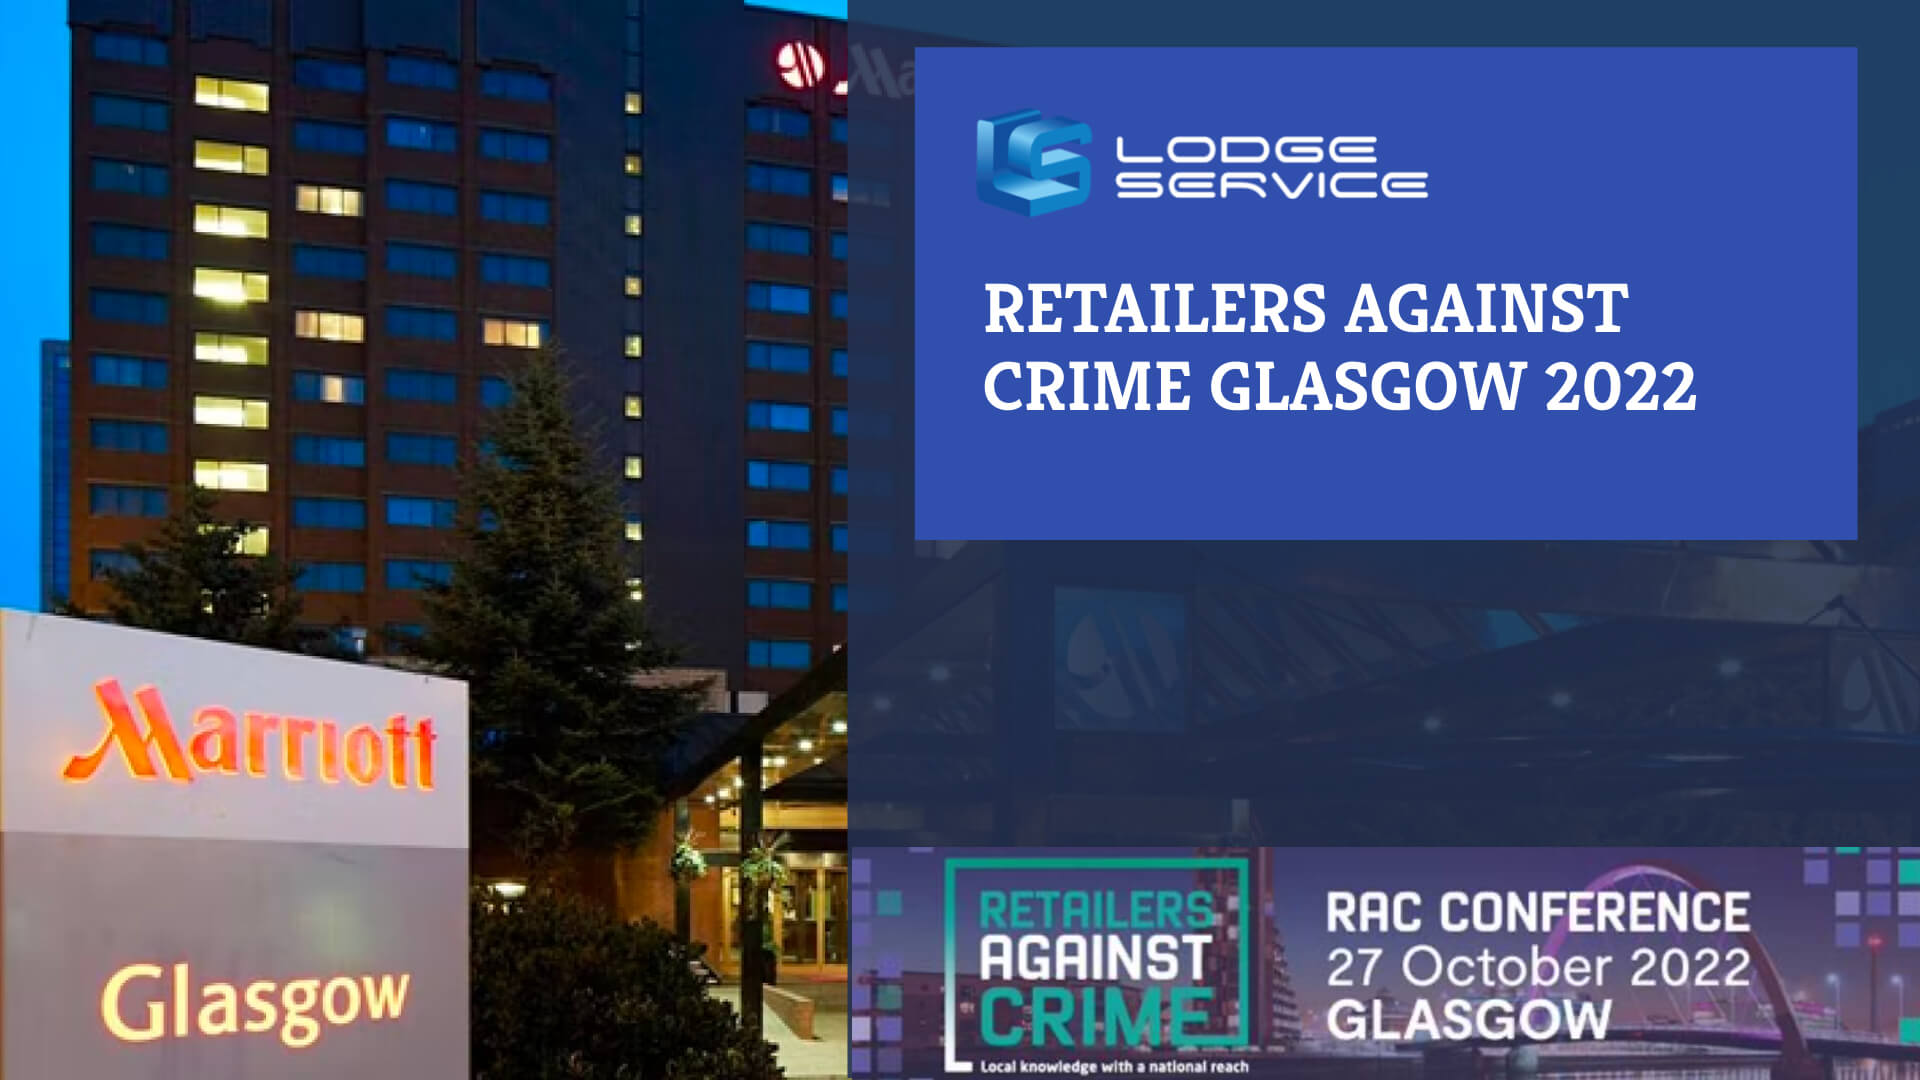 Retailers Against Crime Glasgow 2022